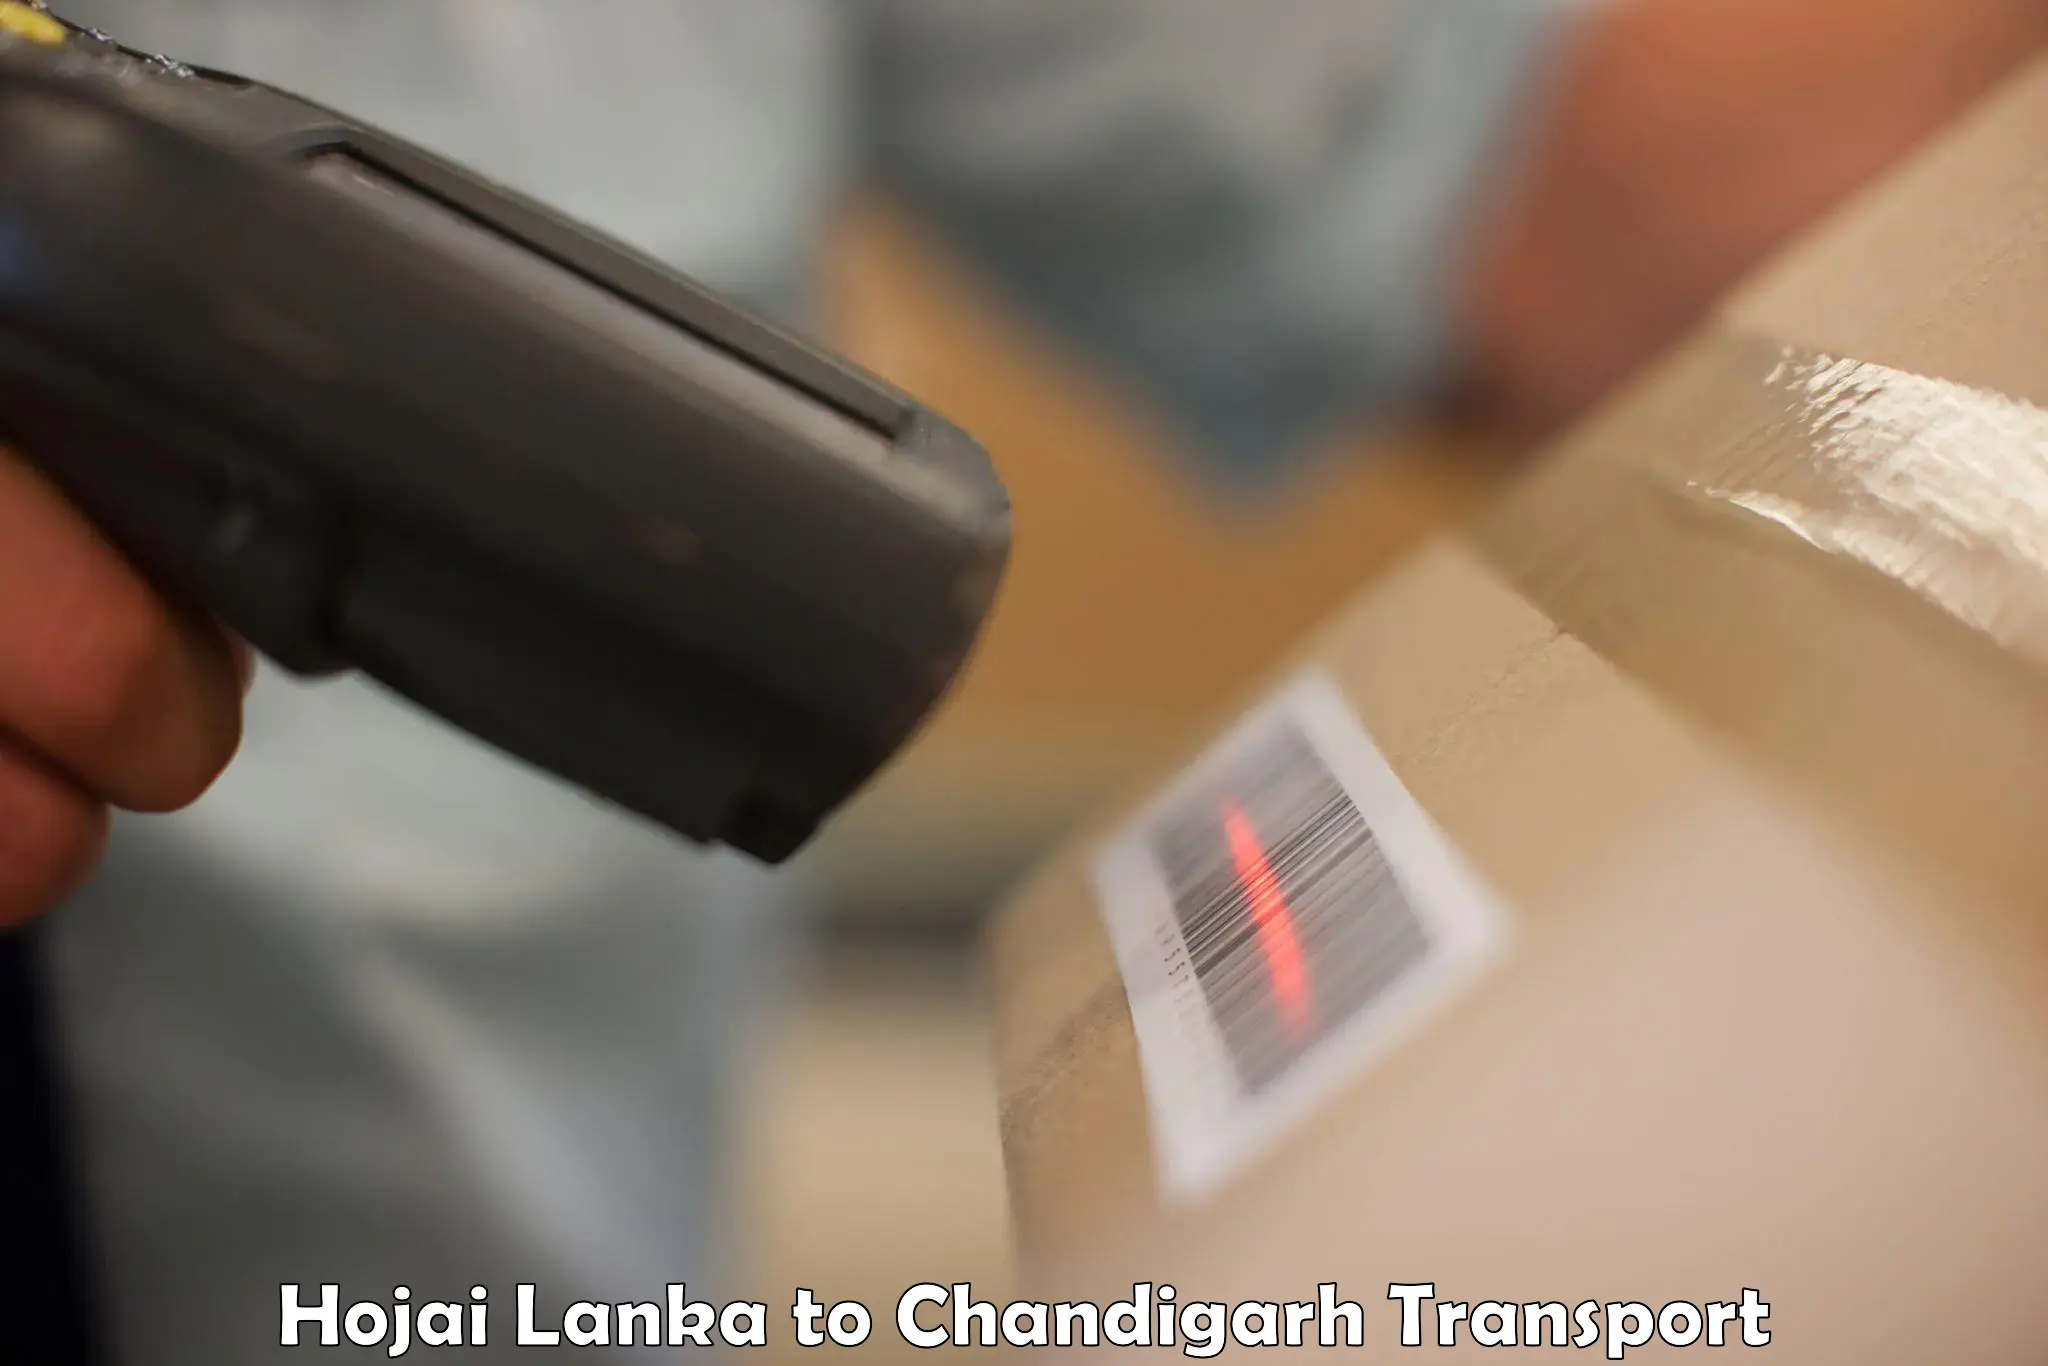 Container transport service Hojai Lanka to Chandigarh